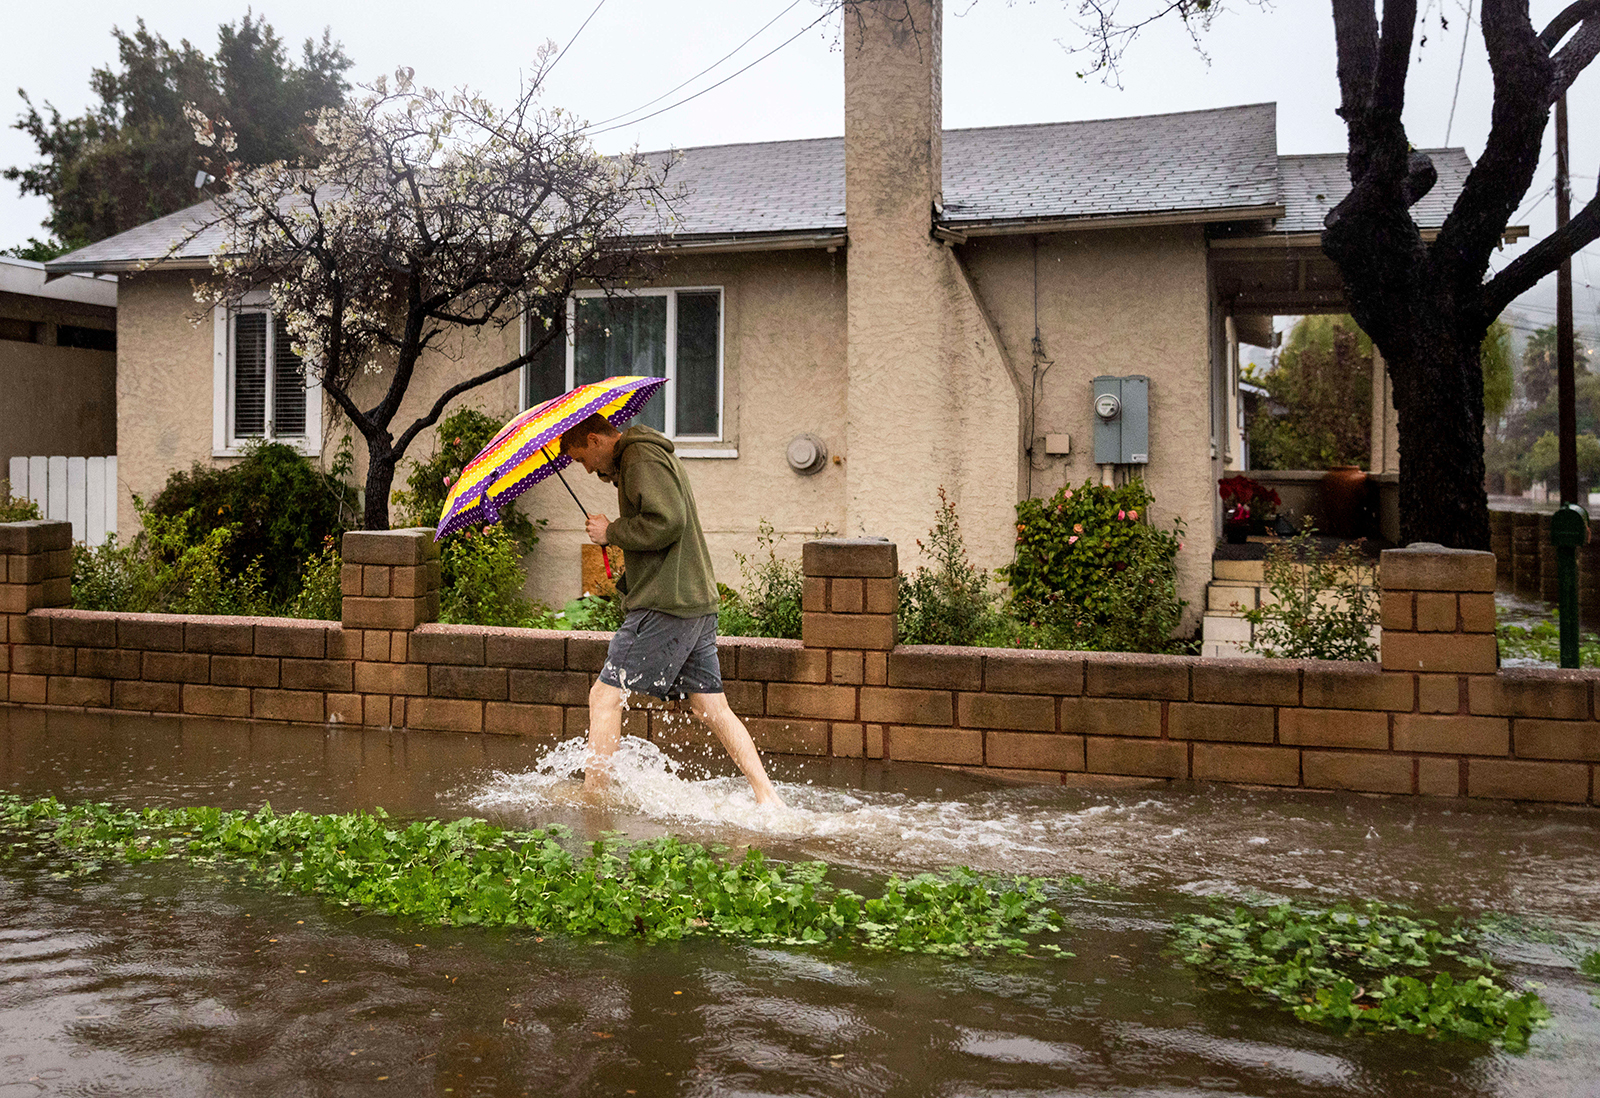 A pedestrian walks through floodwaters during a rainstorm in Santa Barbara, California on February 4.